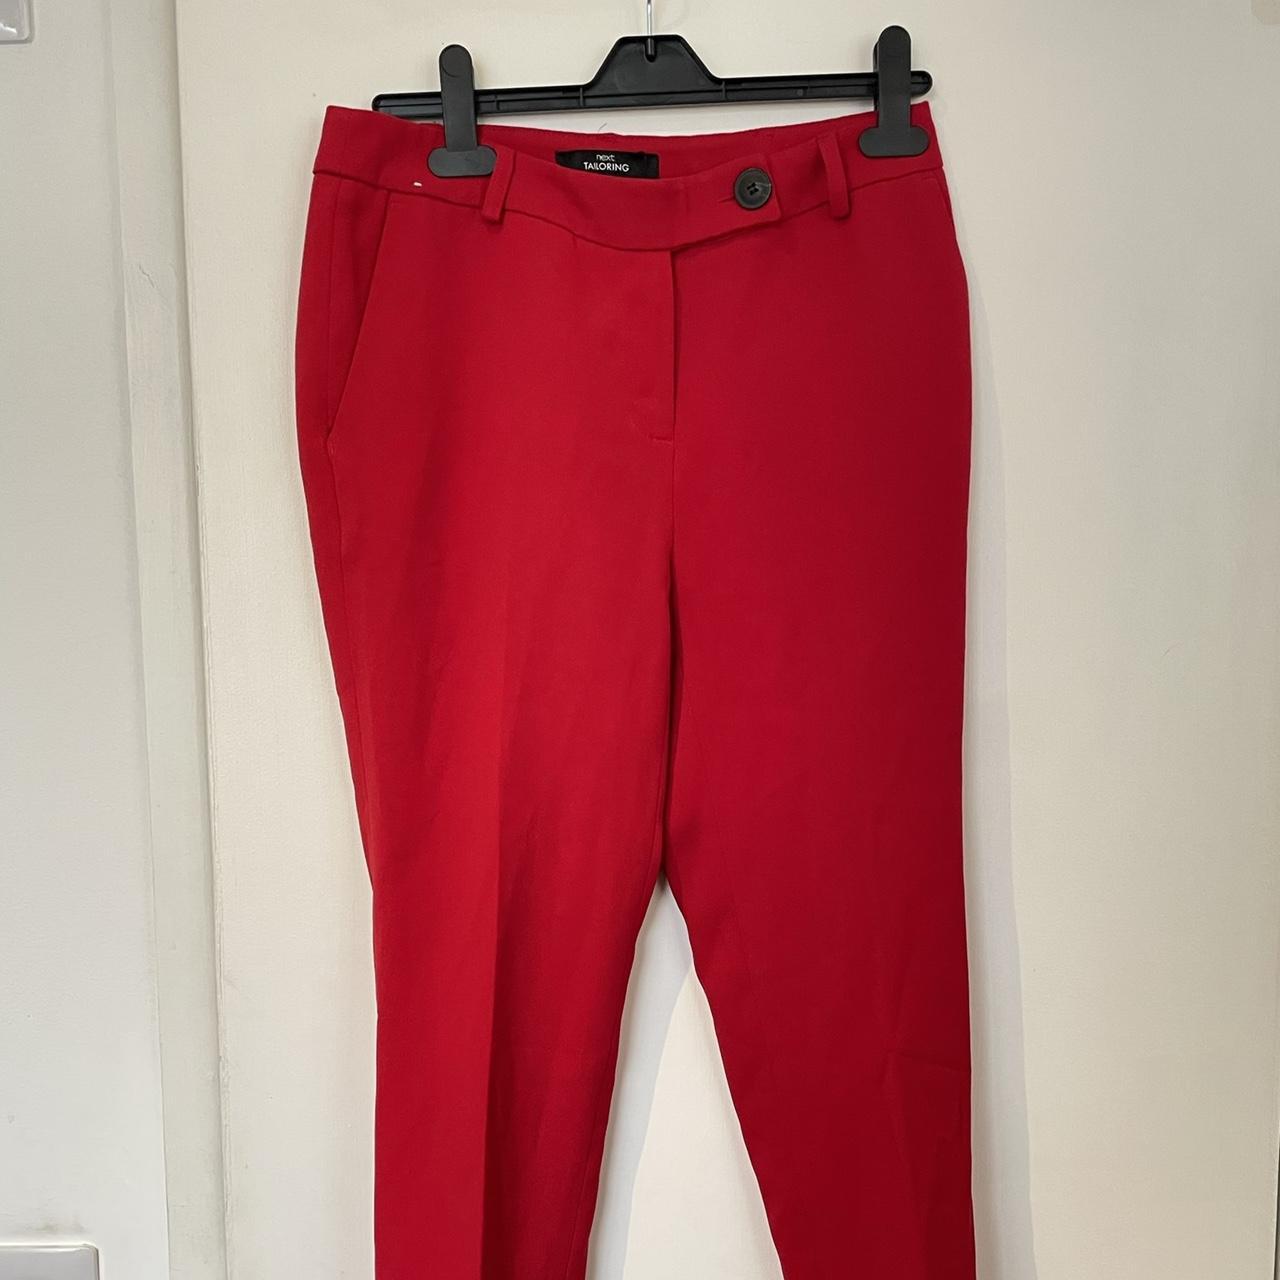 Buy Women's Petite Red Trousers Online | Next UK